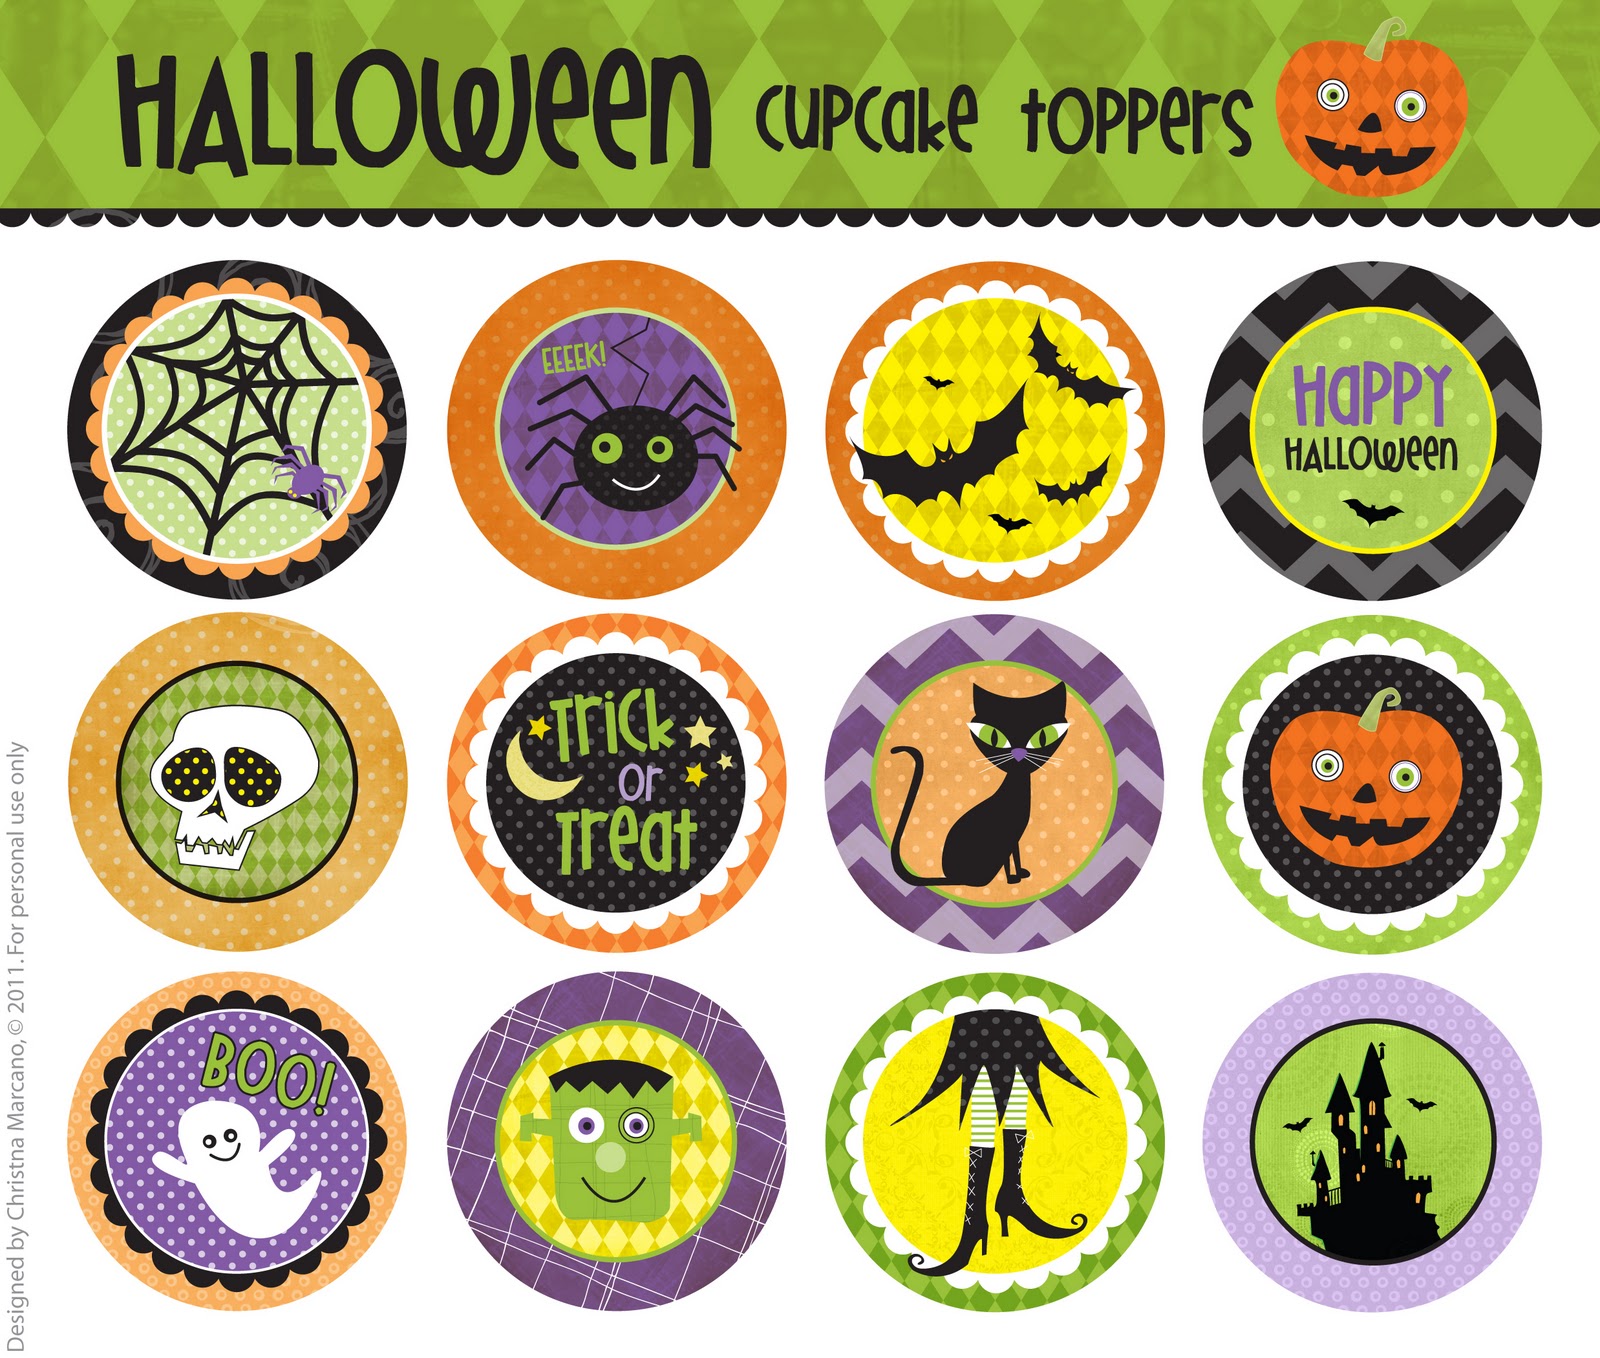  cm2 Halloween Cupcake Toppers F R E E Printable 